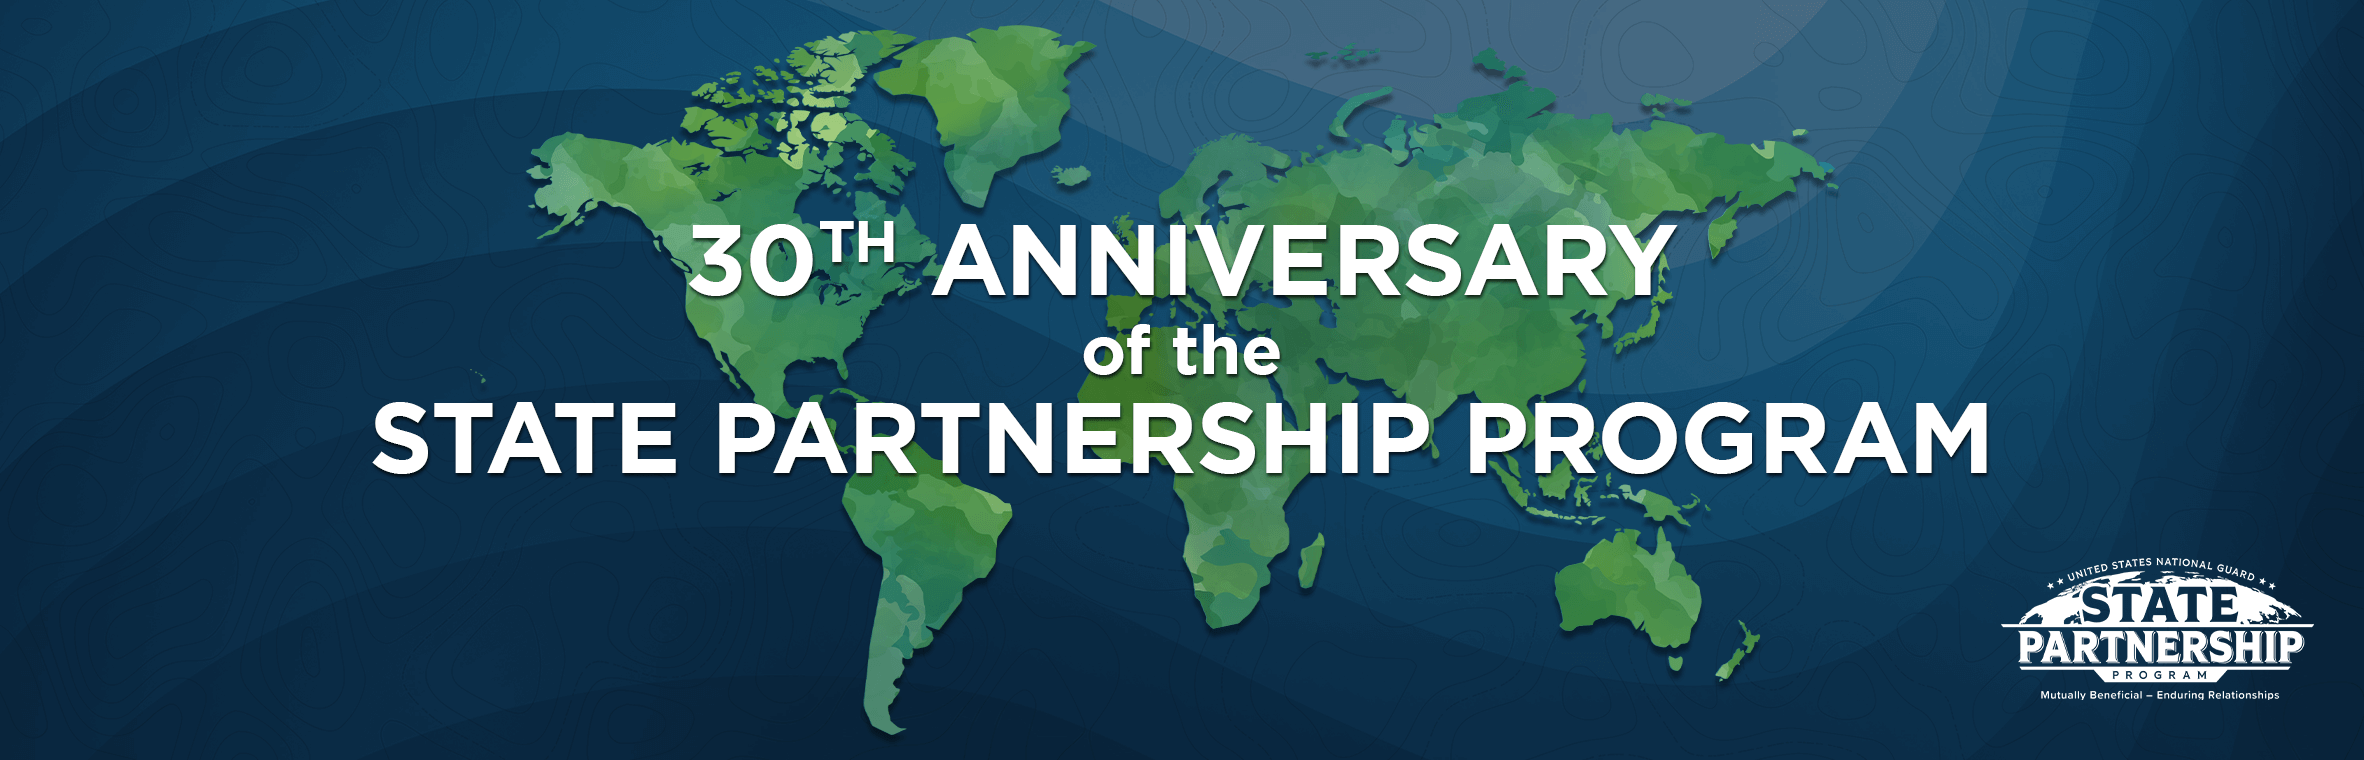 State Partnership Program's 30th Anniversary